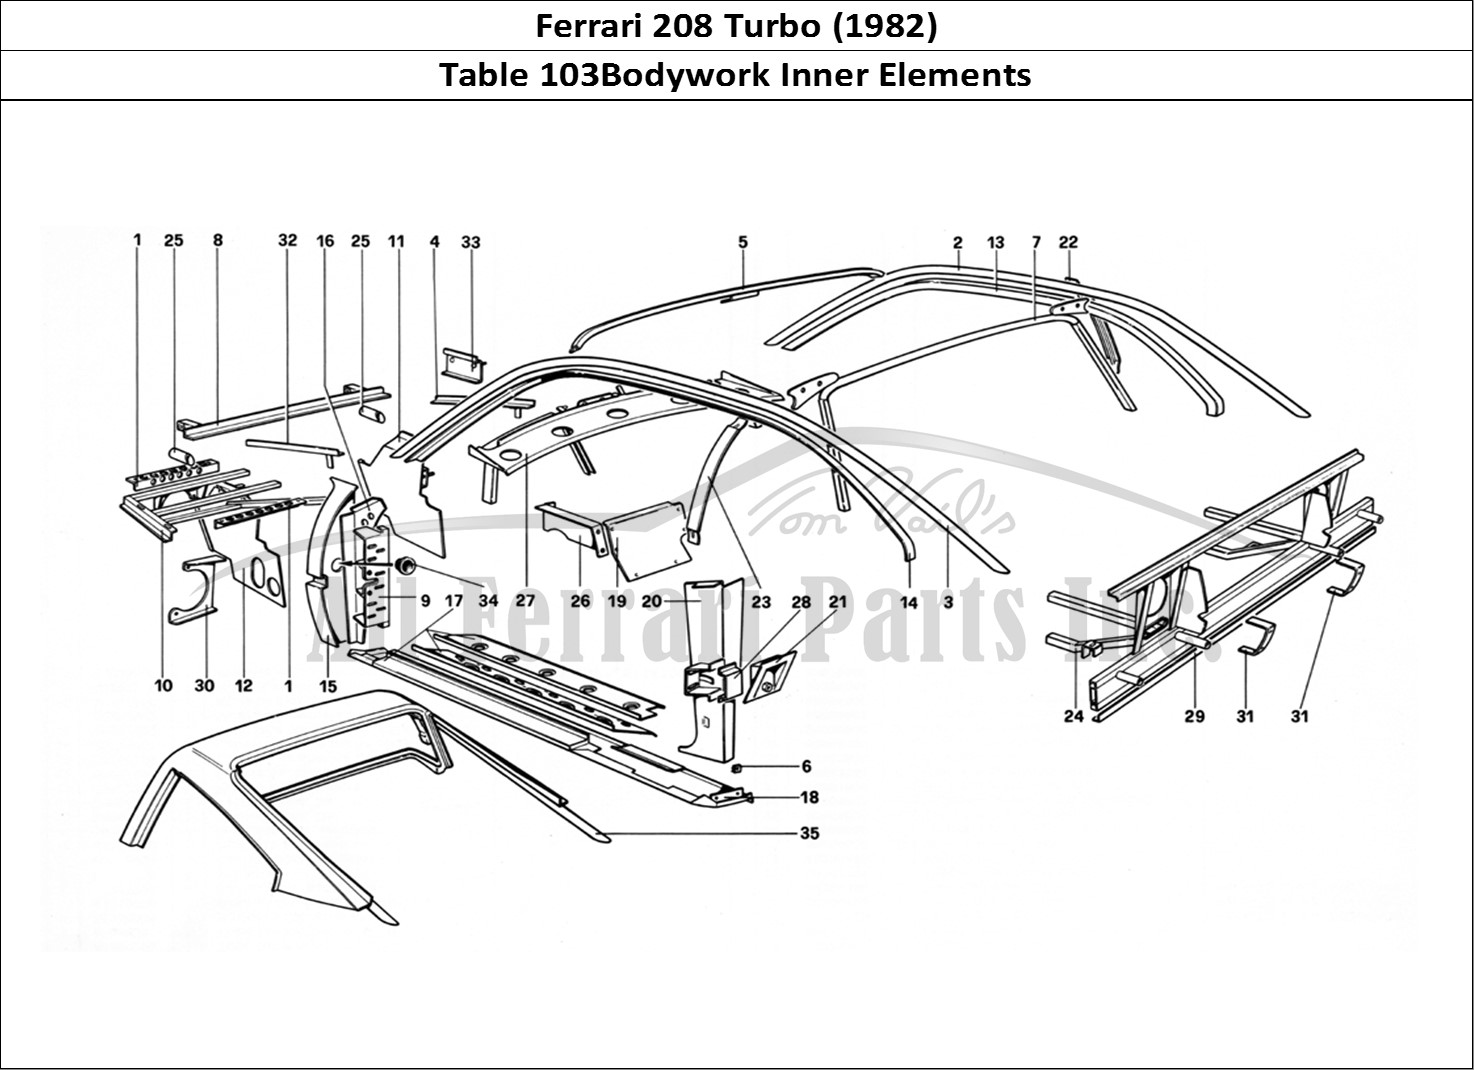 Ferrari Parts Ferrari 208 Turbo (1982) Page 103 Body Shell - Inner Elemen